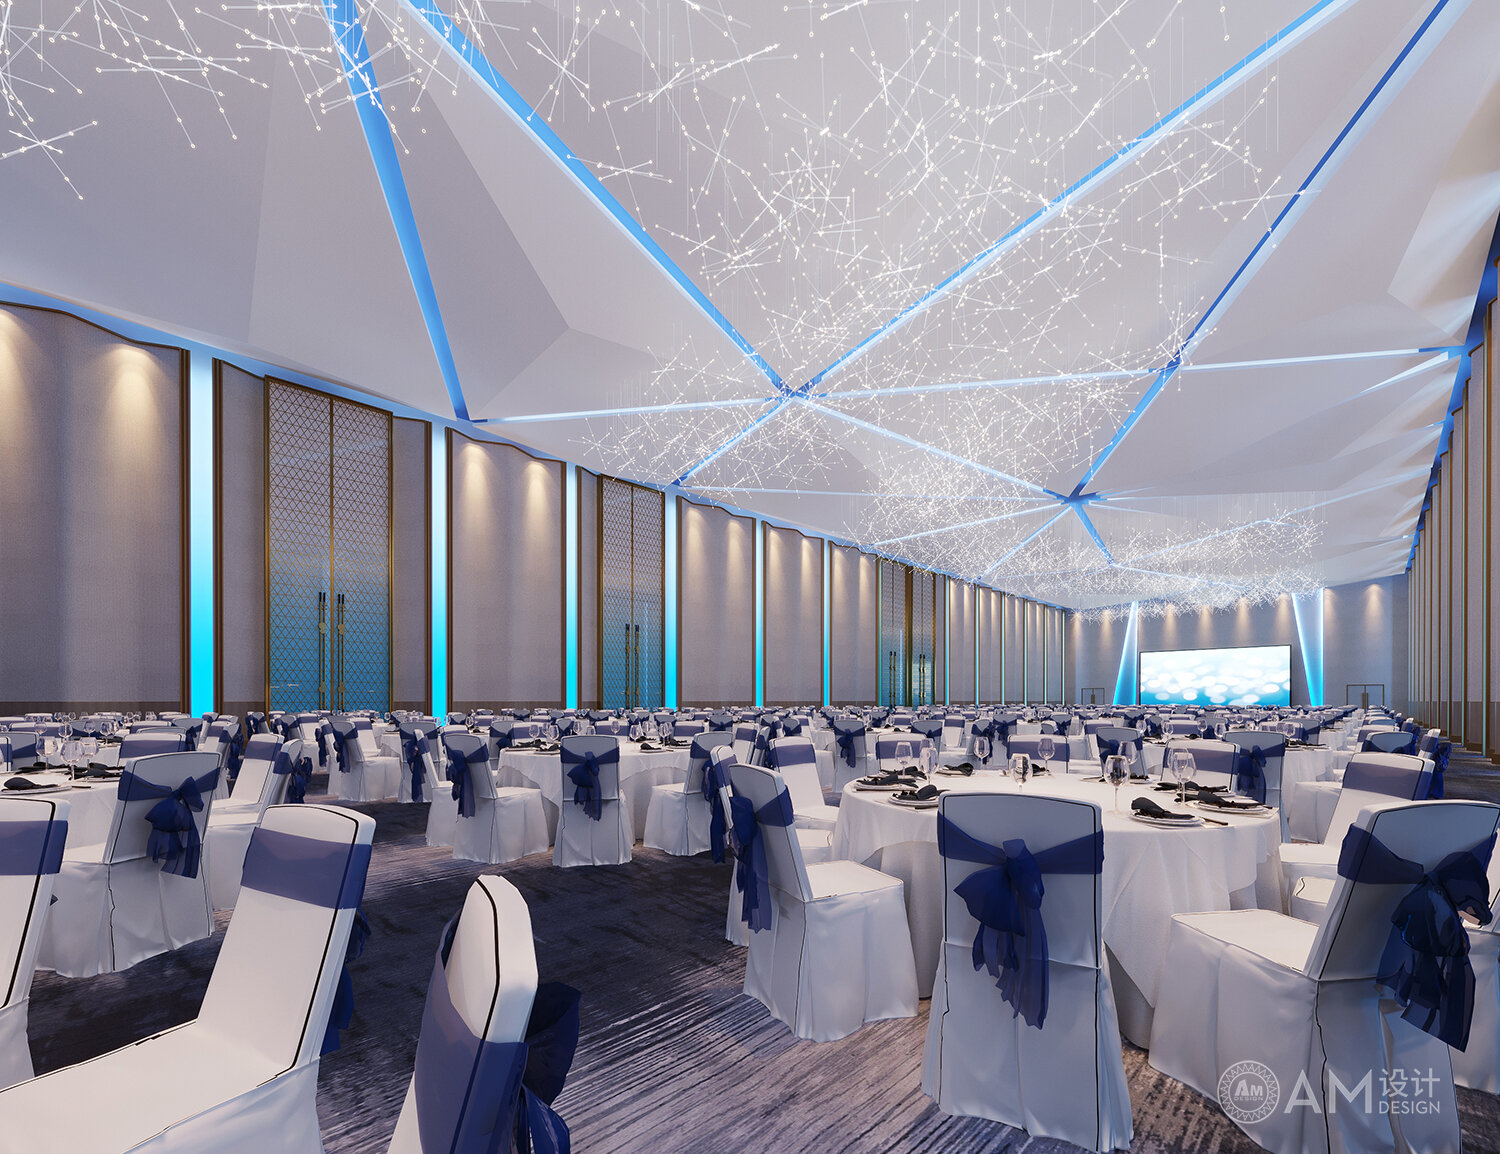 AM DESIGN| Banquet hall design of Liaoning Baida Wanmei Hotel